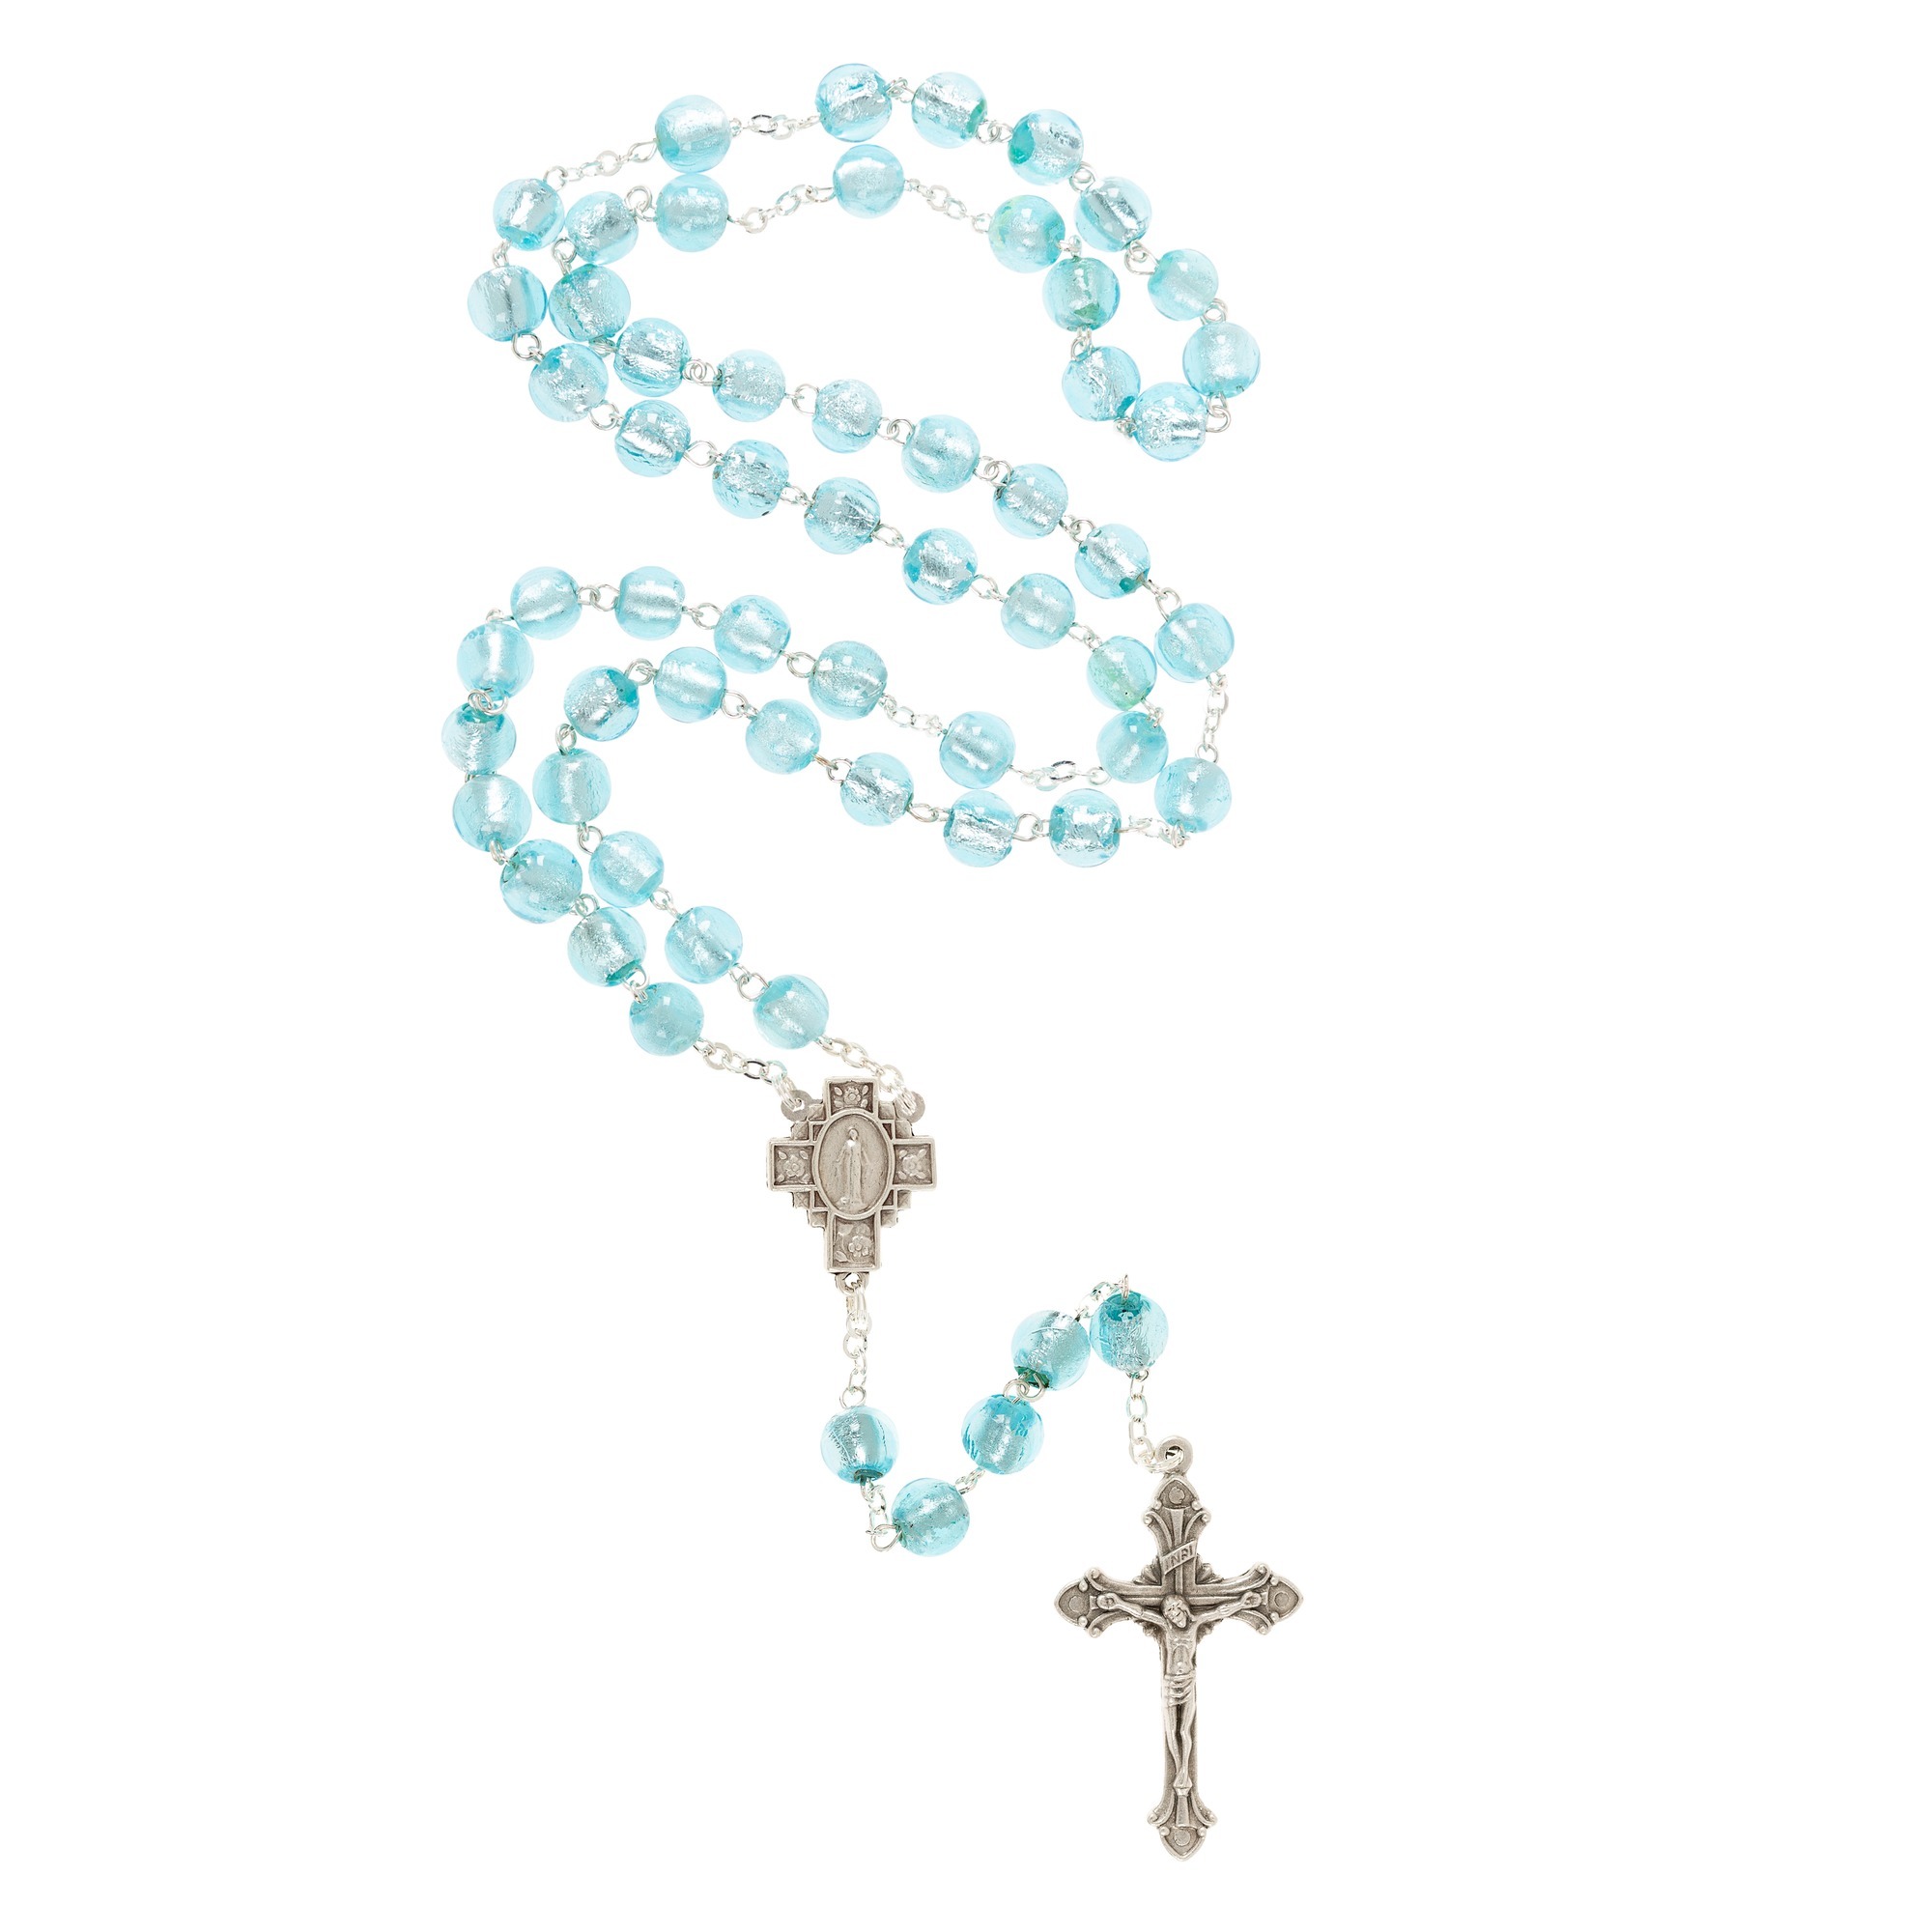 Aqua Handcrafted Glass Bead Rosary | The Catholic Company®